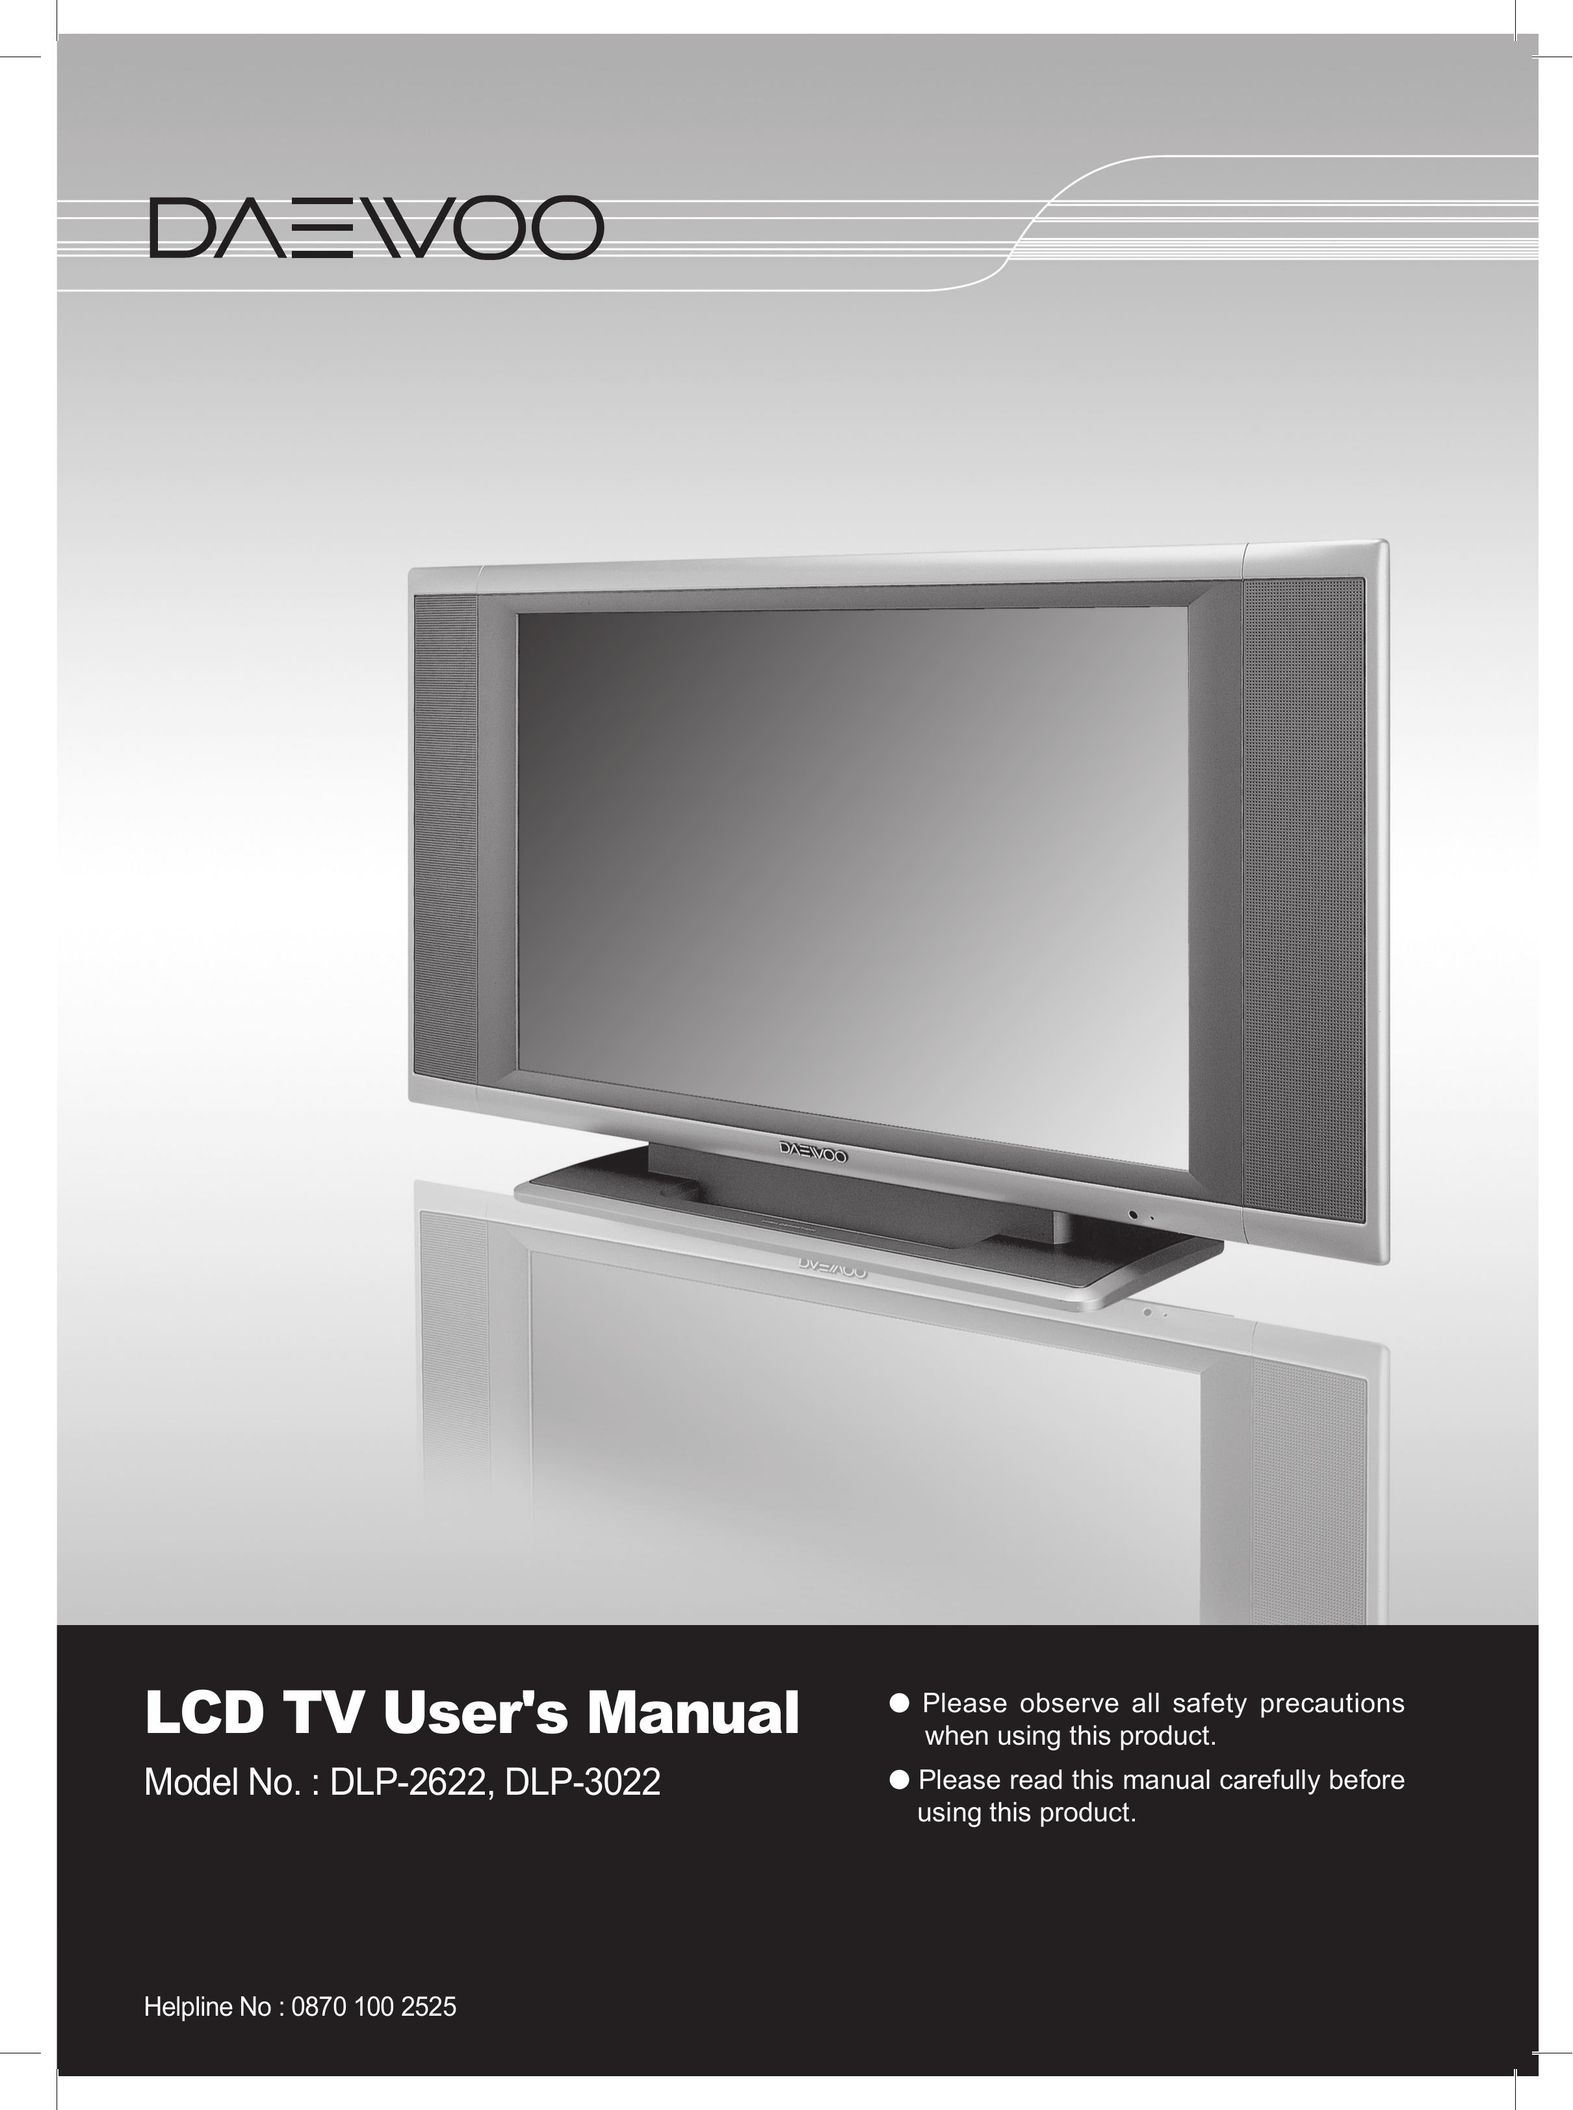 Daewoo DLP-3022 Flat Panel Television User Manual